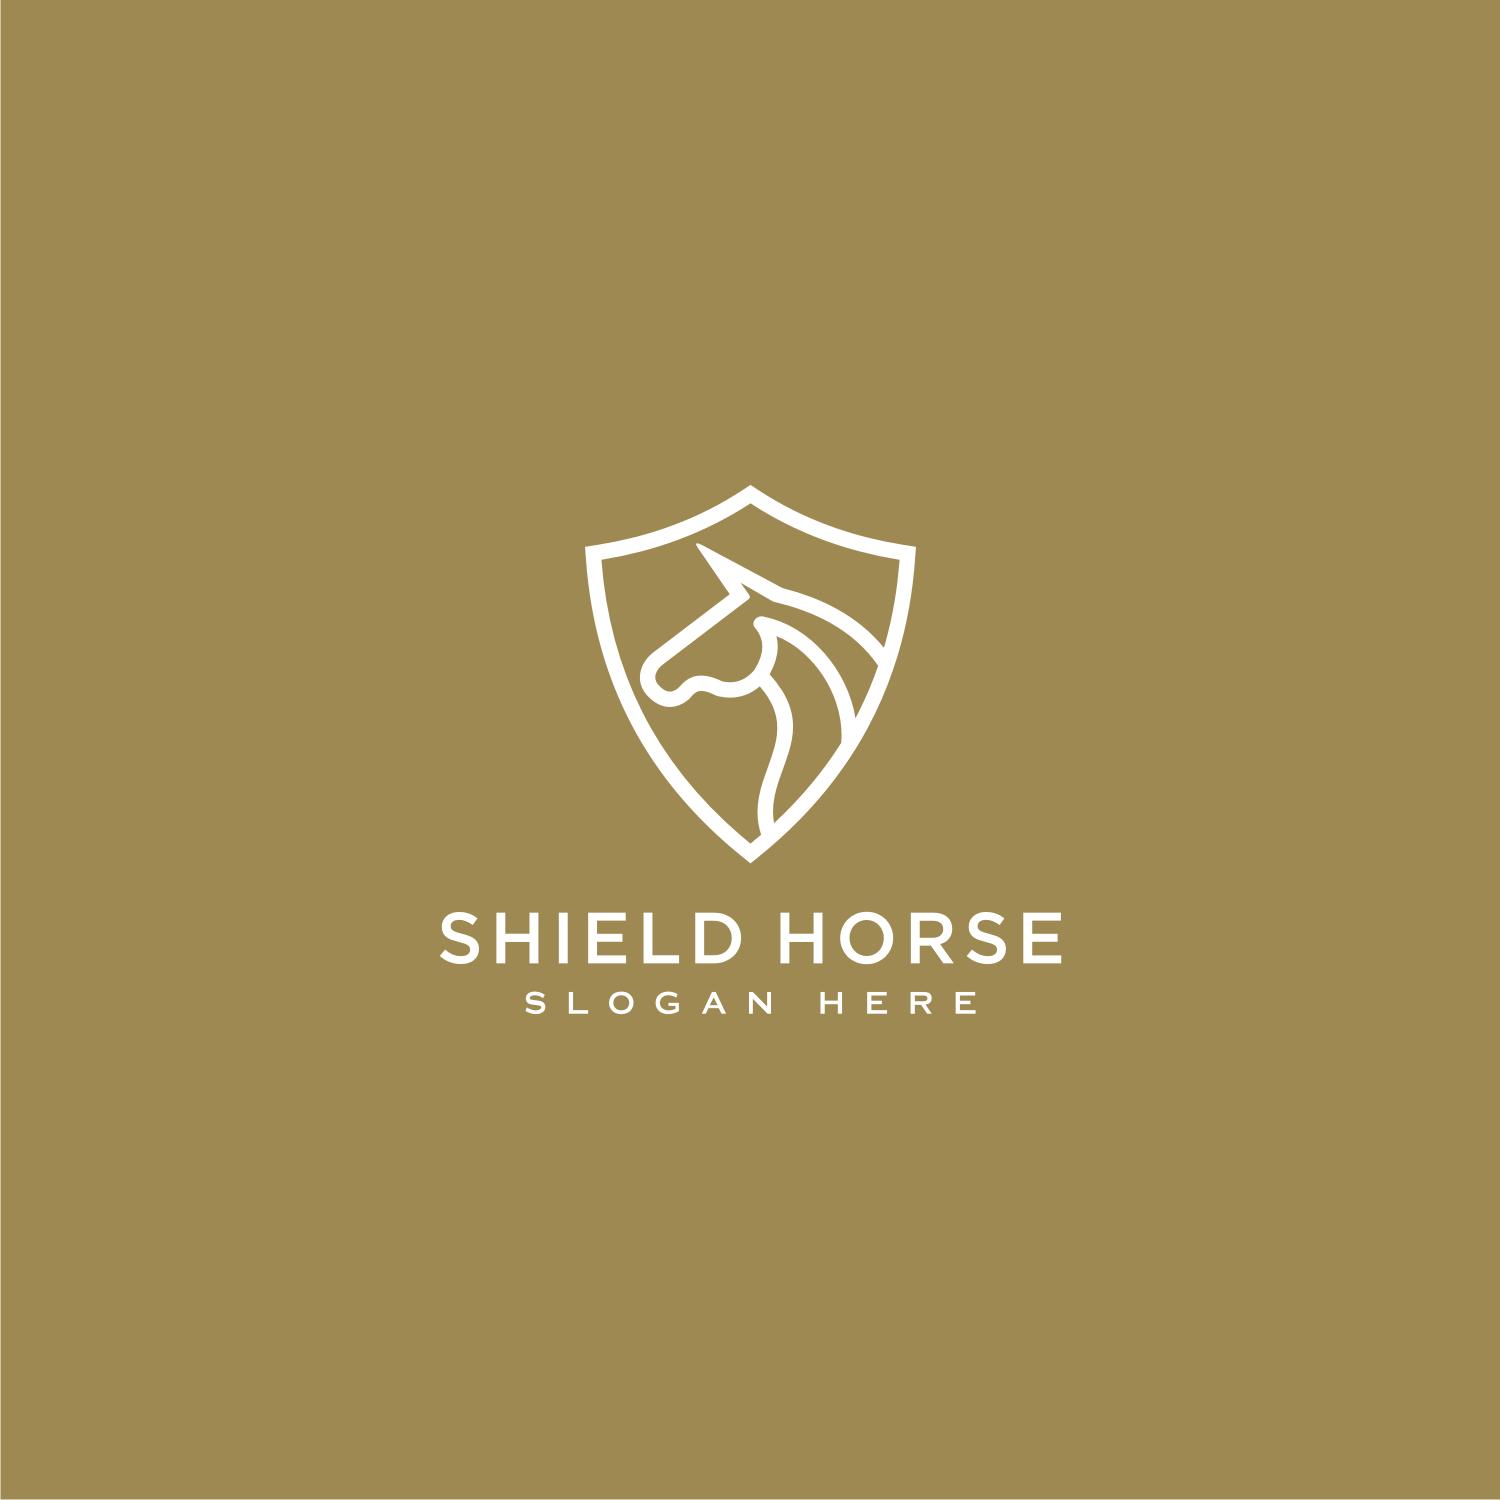 2 Head Horse And Shield Logo Vector Example.